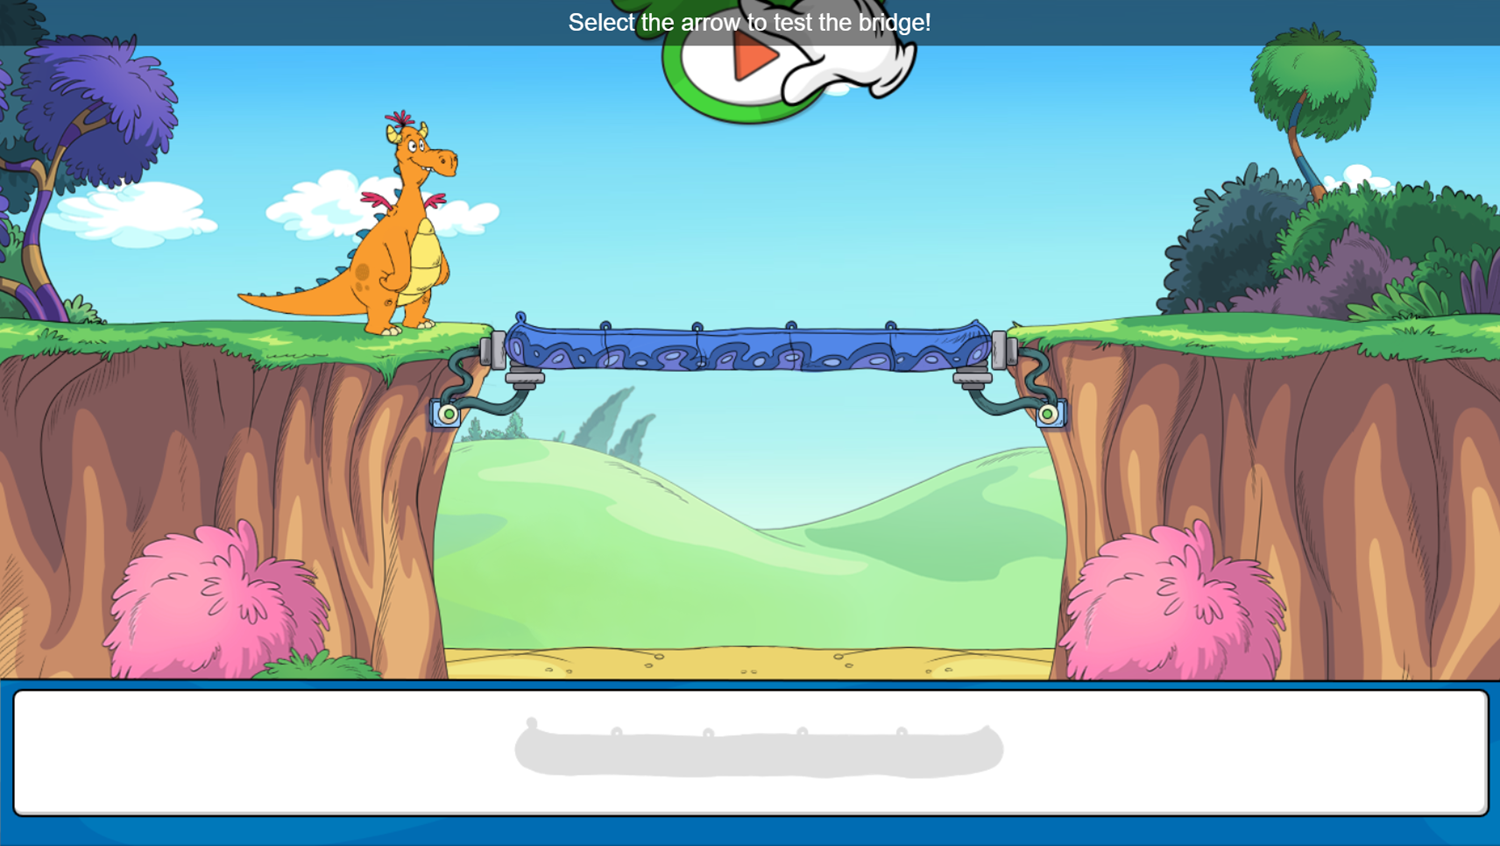 The Cat in the Hat Bridge-a-Rama Game Instructions Screenshot.